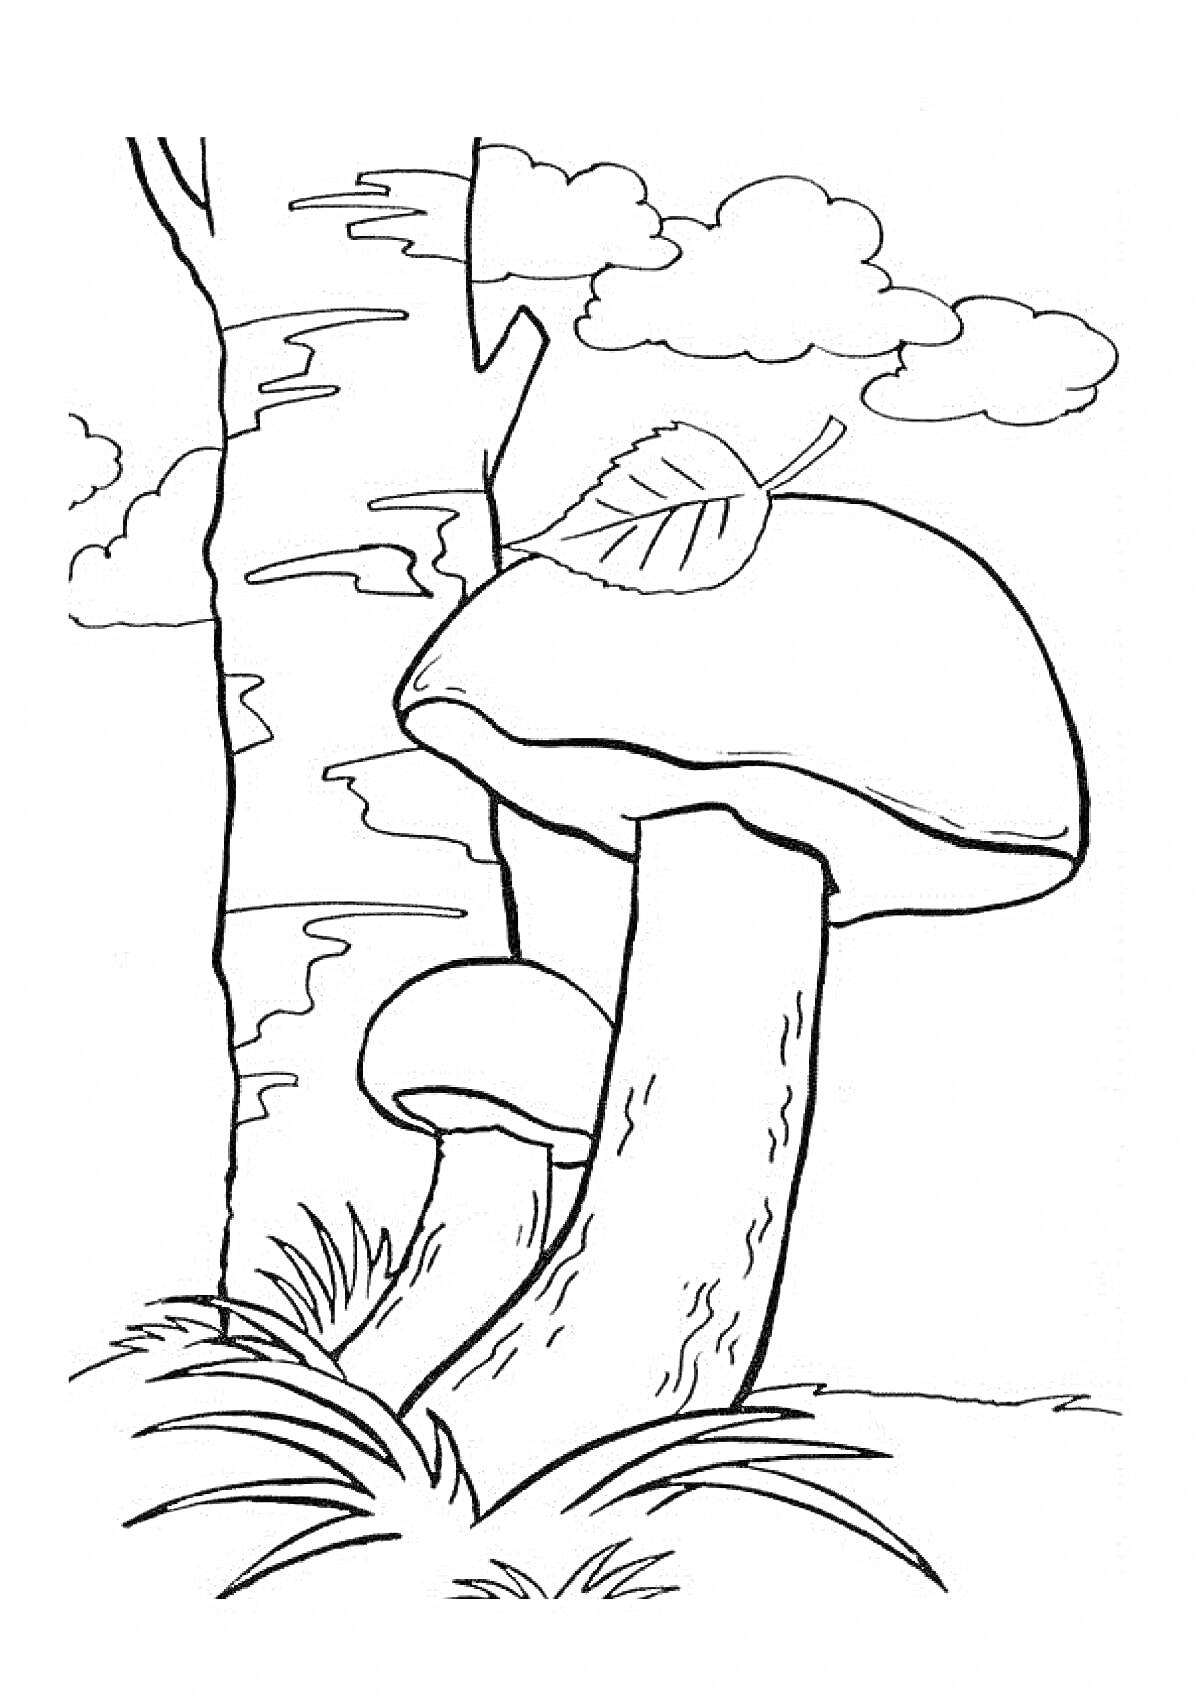 Раскраска Береза, грибы, трава, облака и лист